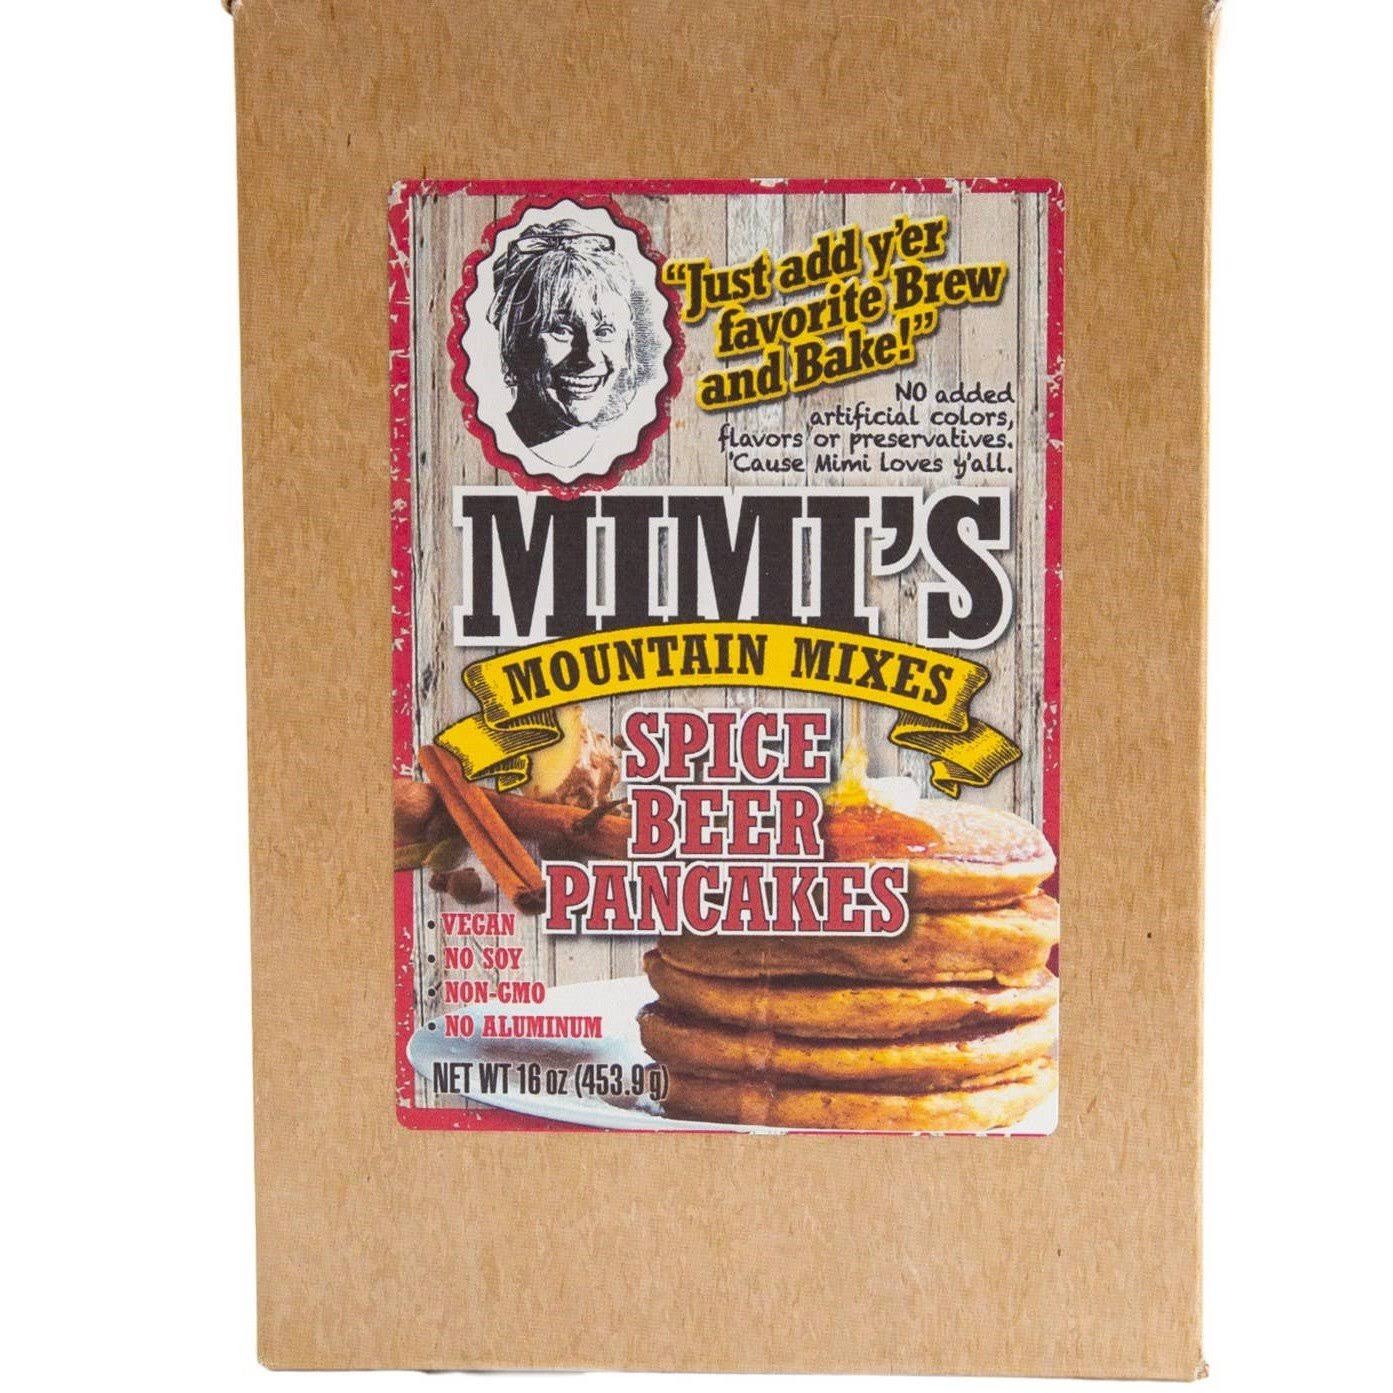 Mimi's Mountain Mixes - Spice Beer Pancakes